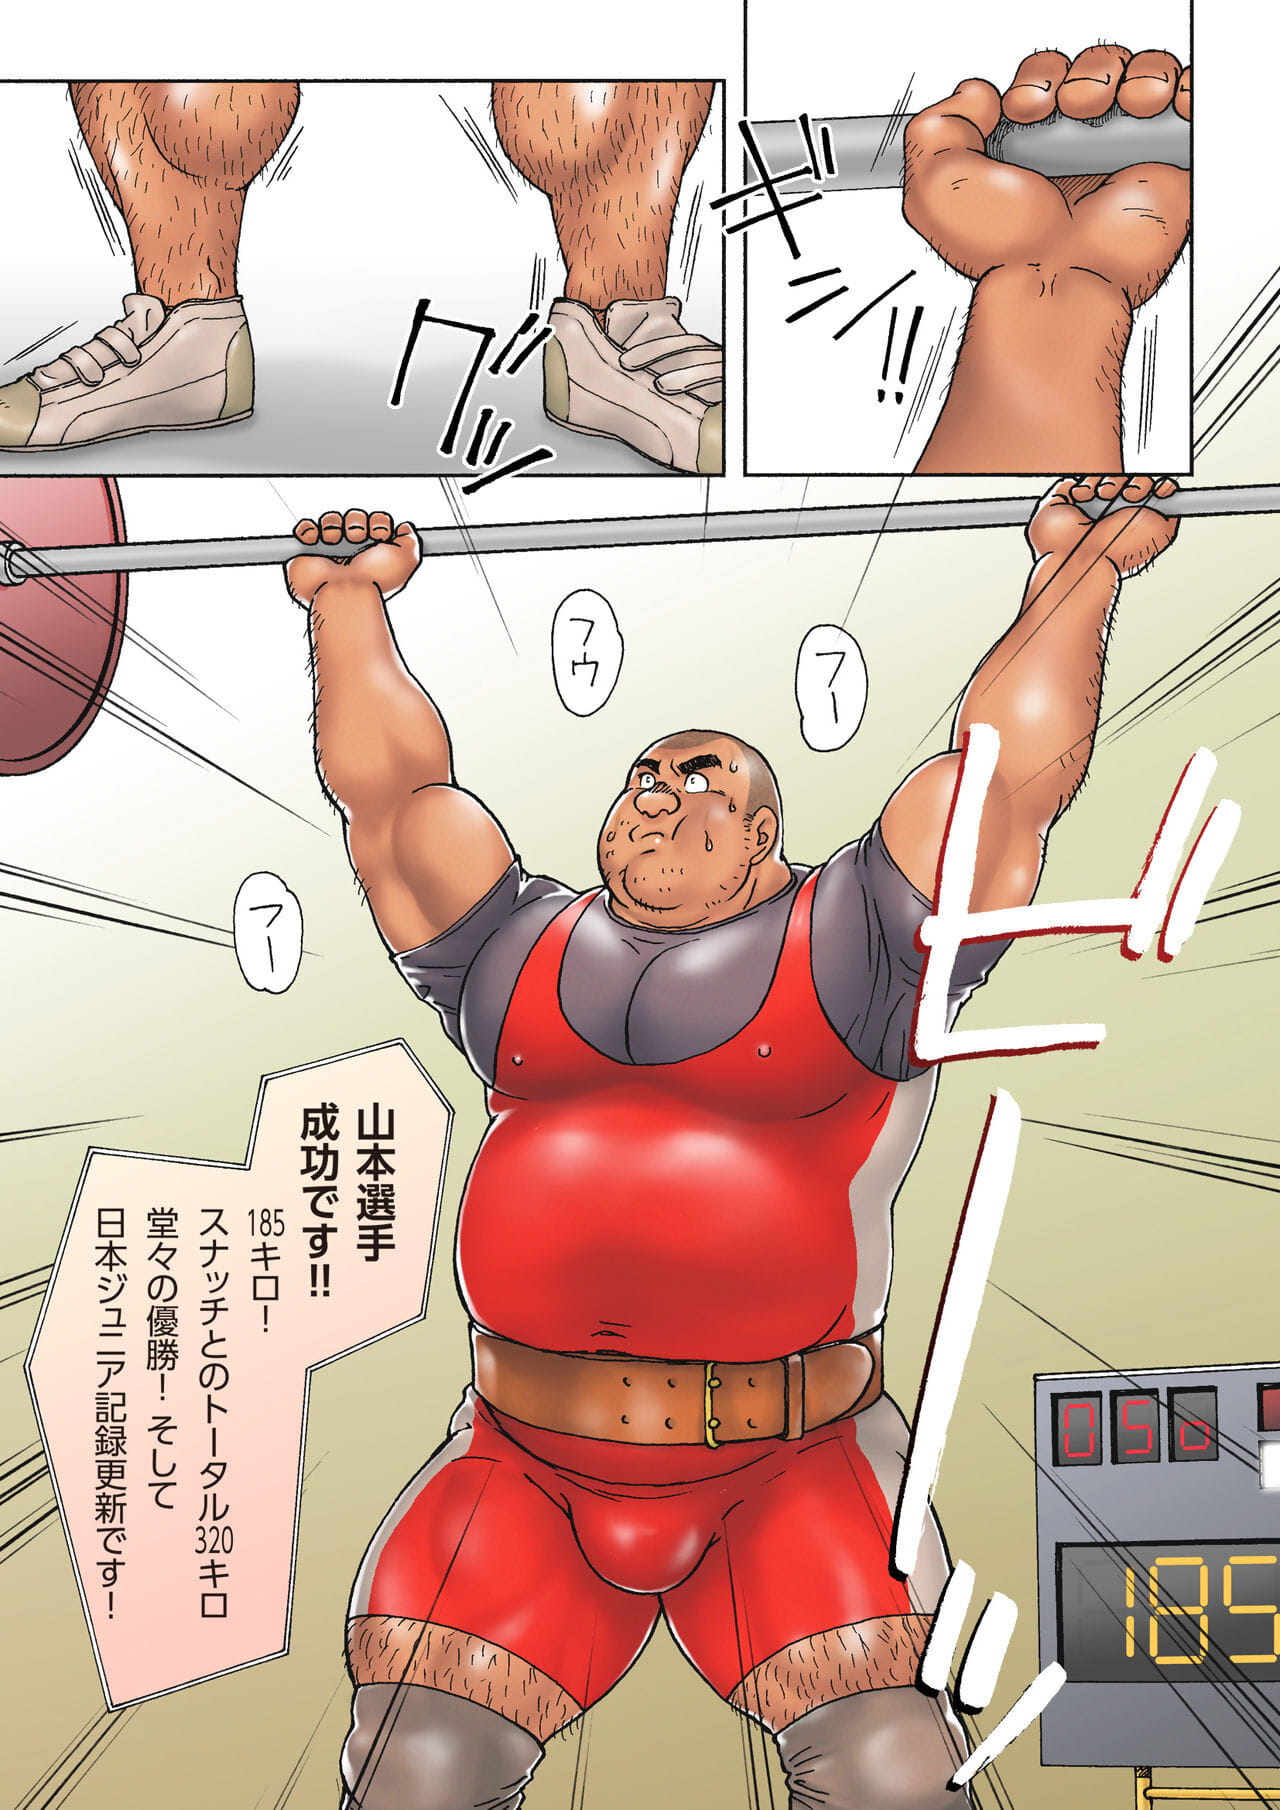 danshi koukousei weightlifter ไท่ไค อไป ไม่ โรงแรม De ไม่ Aoi yoru